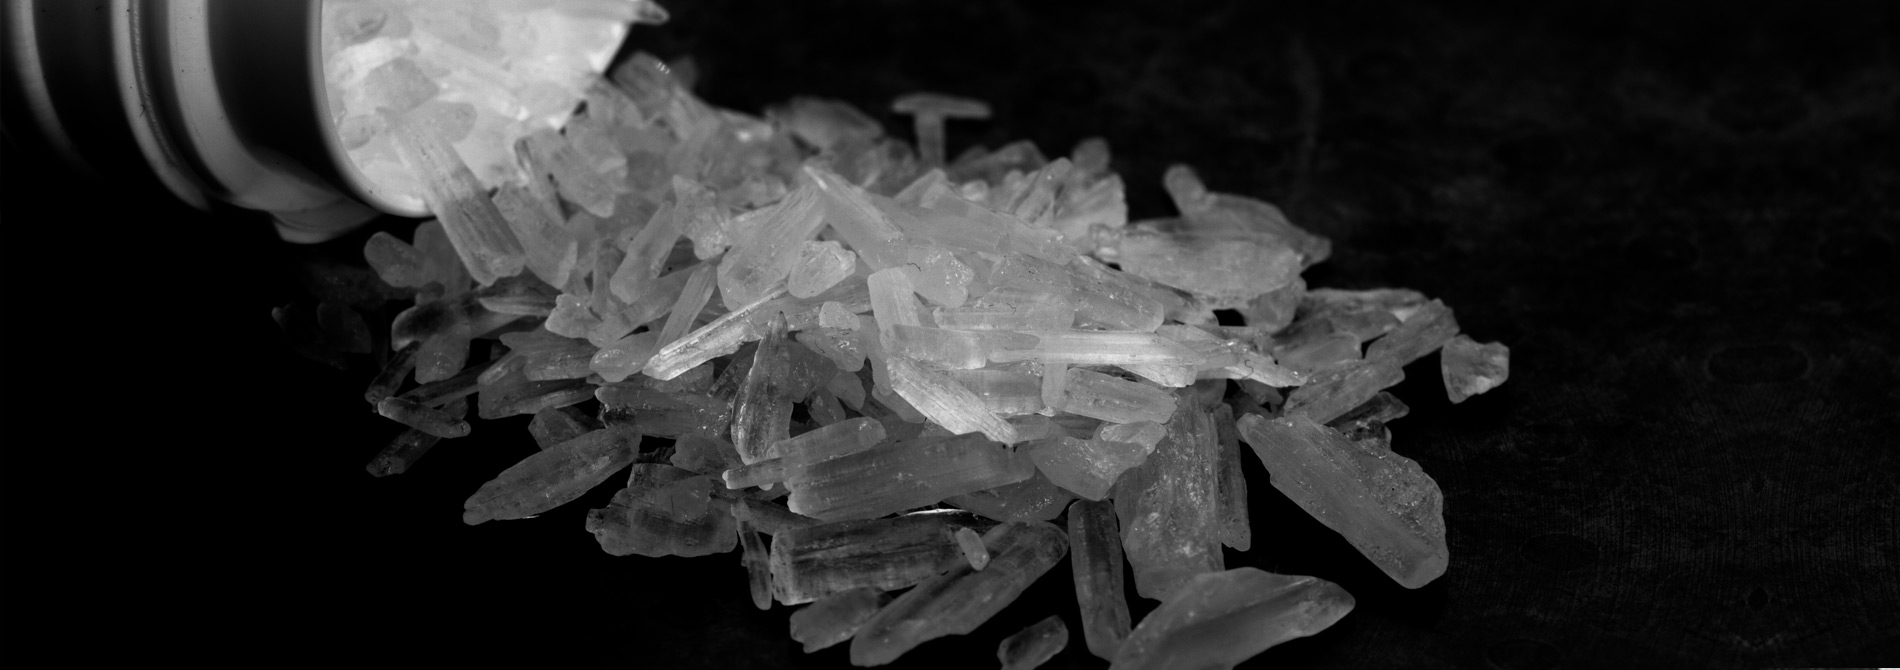 photo of crystal meth